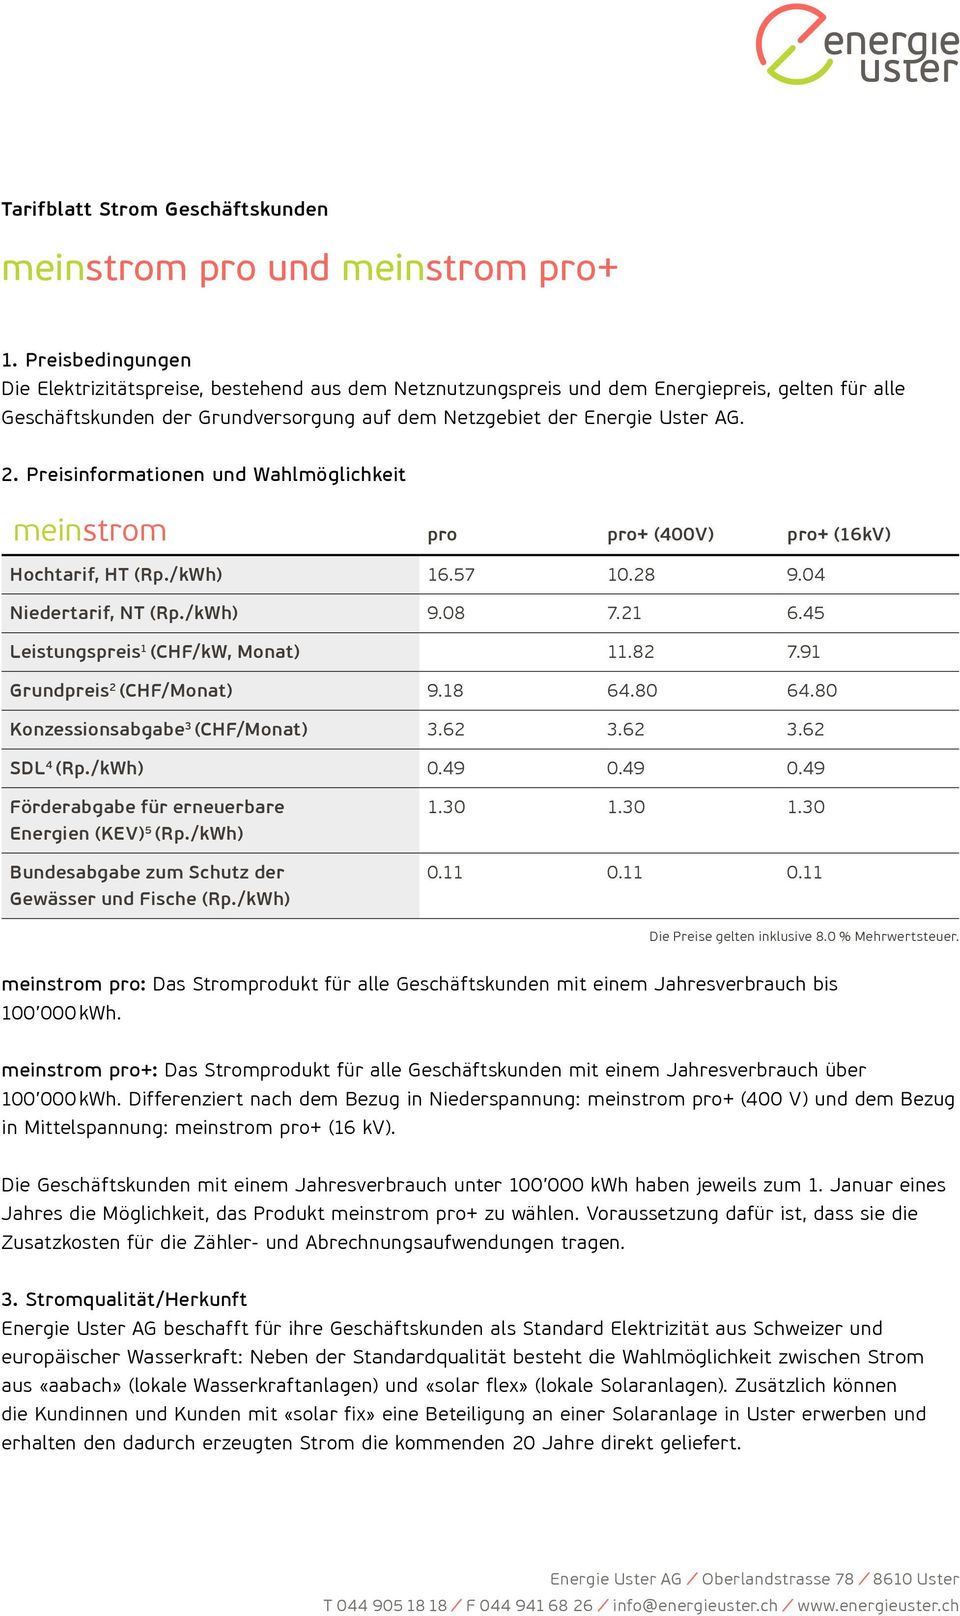 45 Leistungspreis 1 (CHF/kW, Monat) 11.82 7.91 Grundpreis 2 (CHF/Monat) 9.18 64.80 64.80 Konzessionsabgabe 3 (CHF/Monat) 3.62 3.62 3.62 SDL 4 (Rp./kWh) 0.49 0.